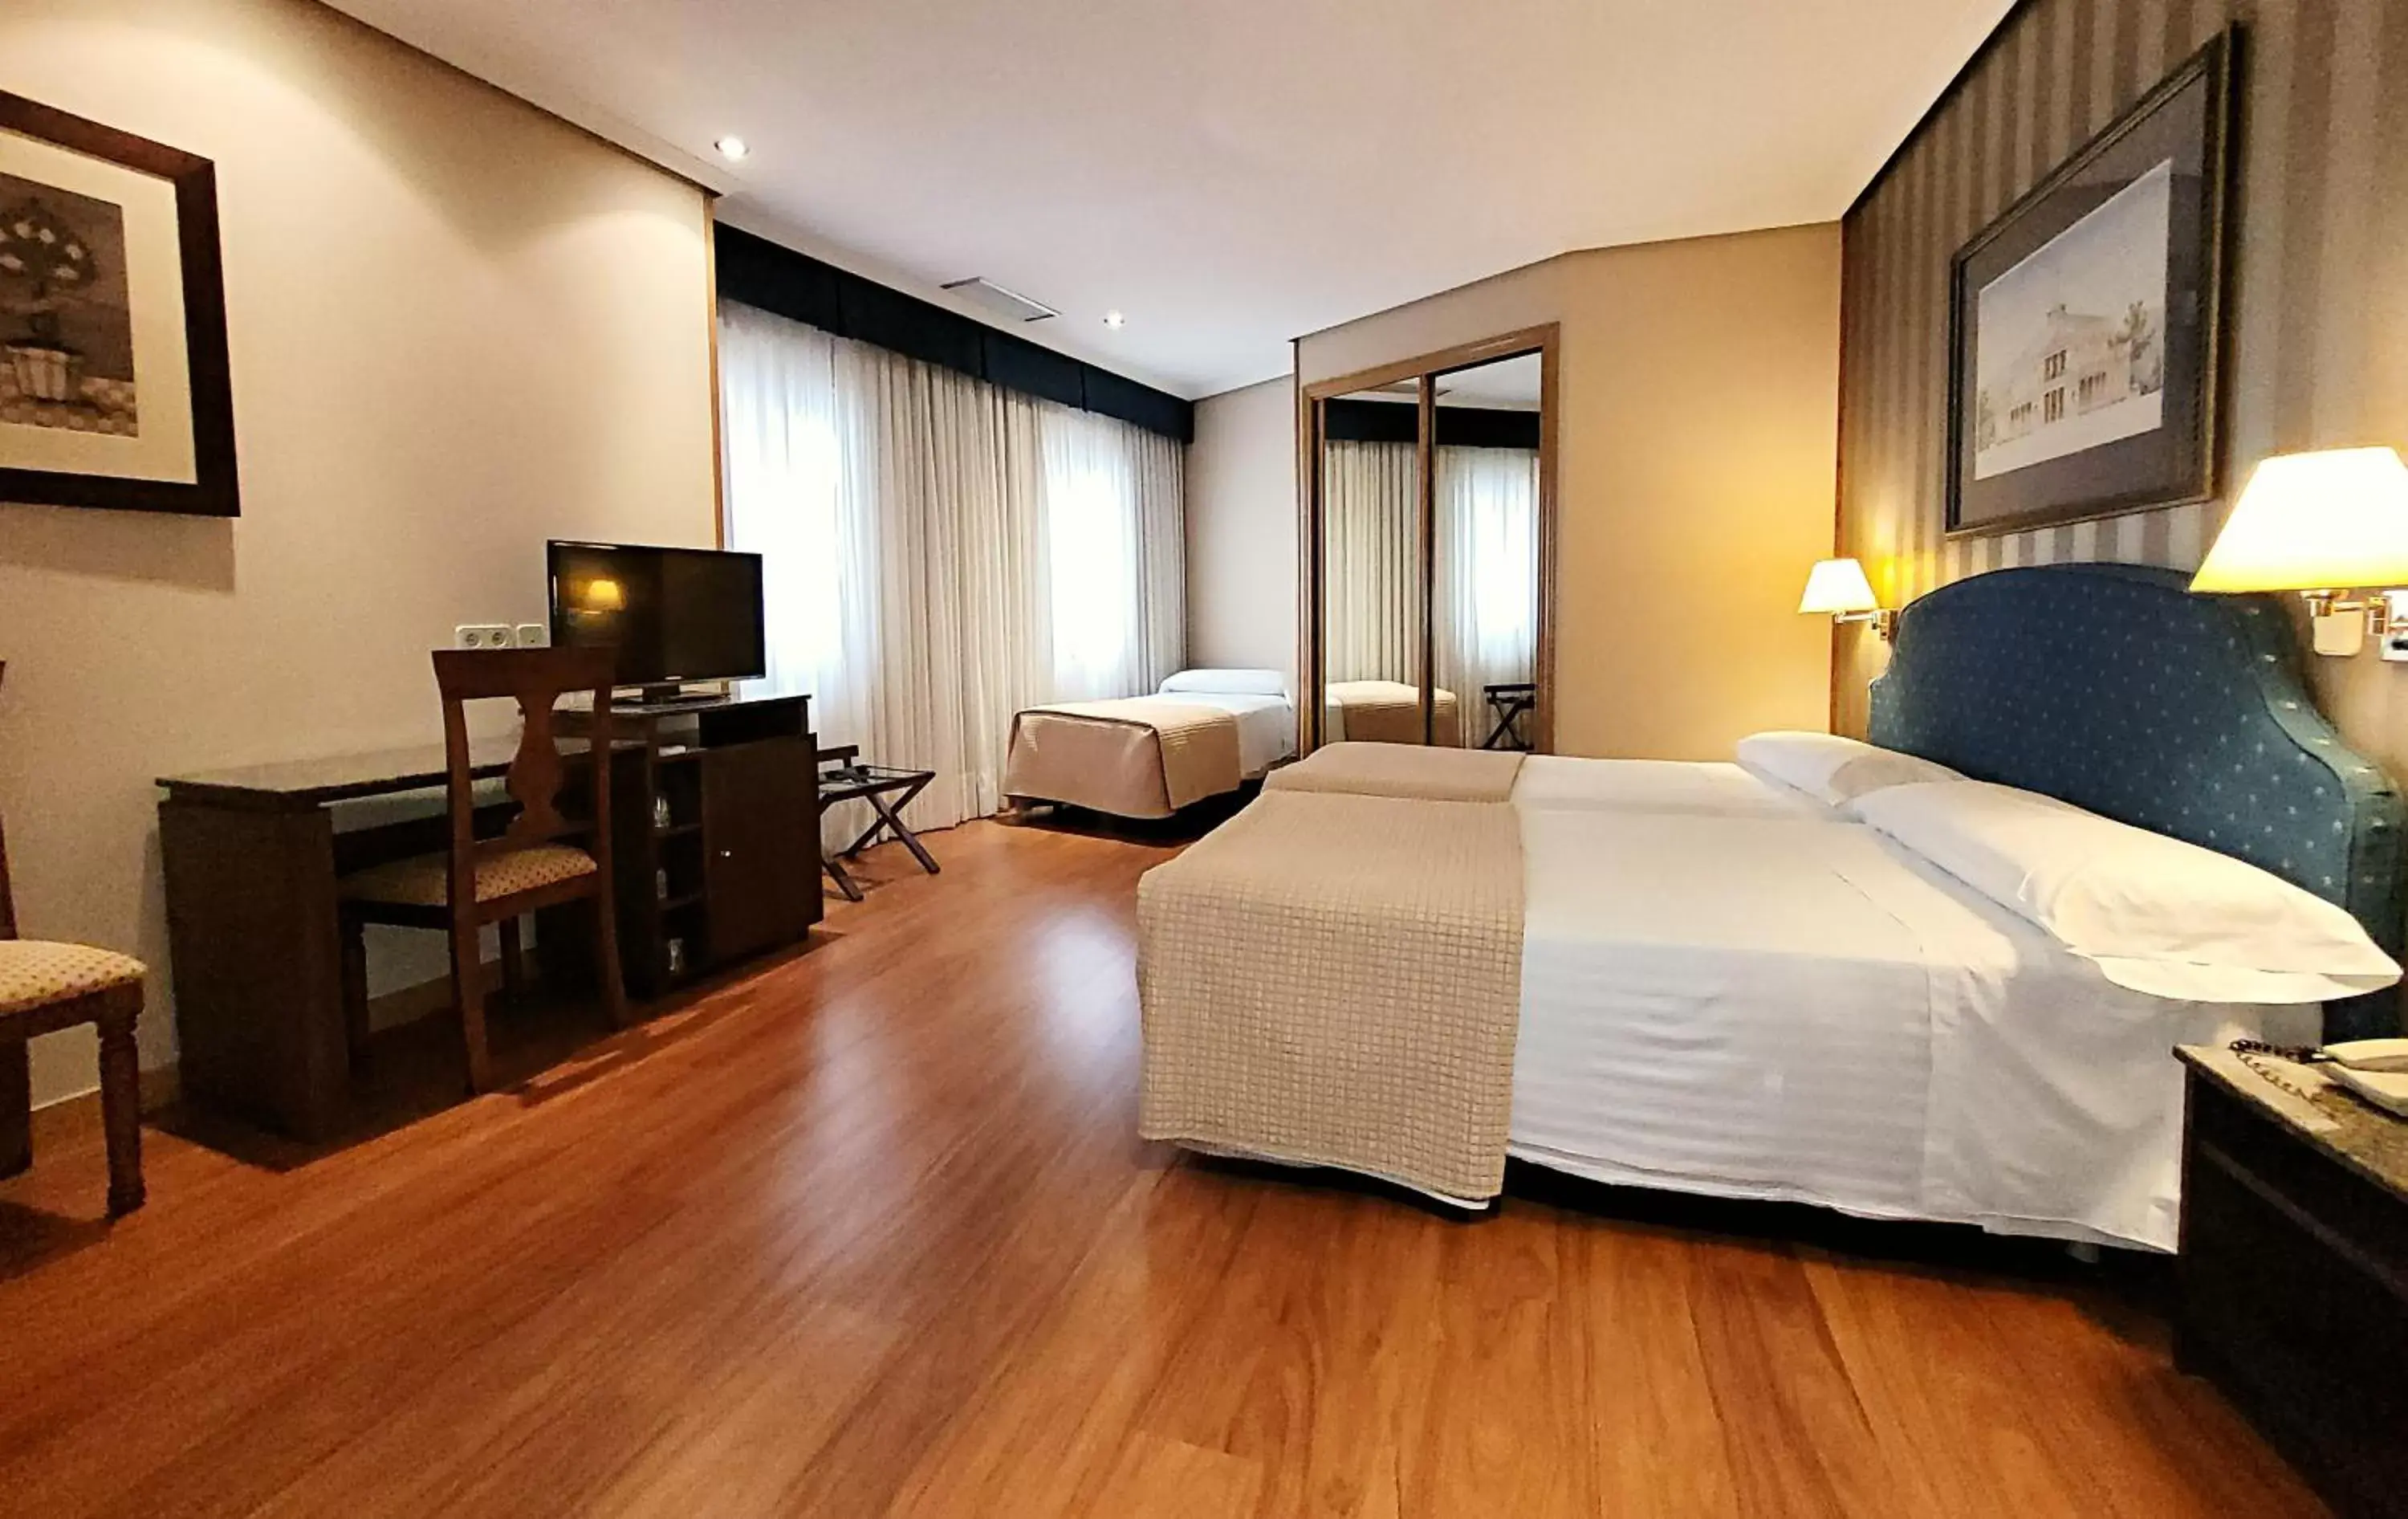 Bedroom in Hotel Imperial